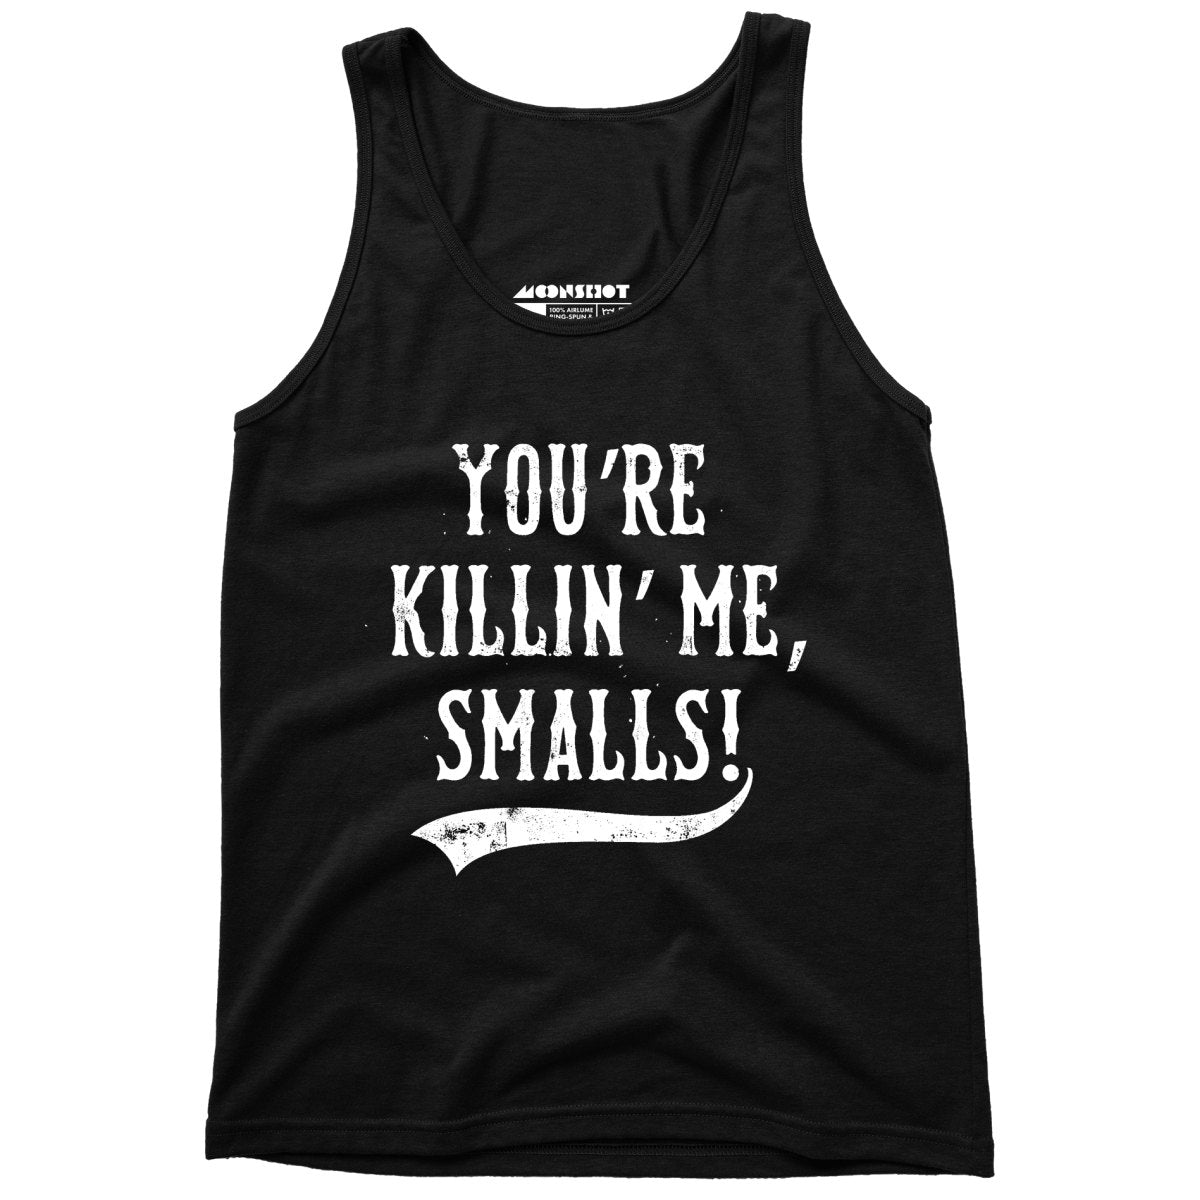 You're Killin' Me, Smalls! - Unisex Tank Top